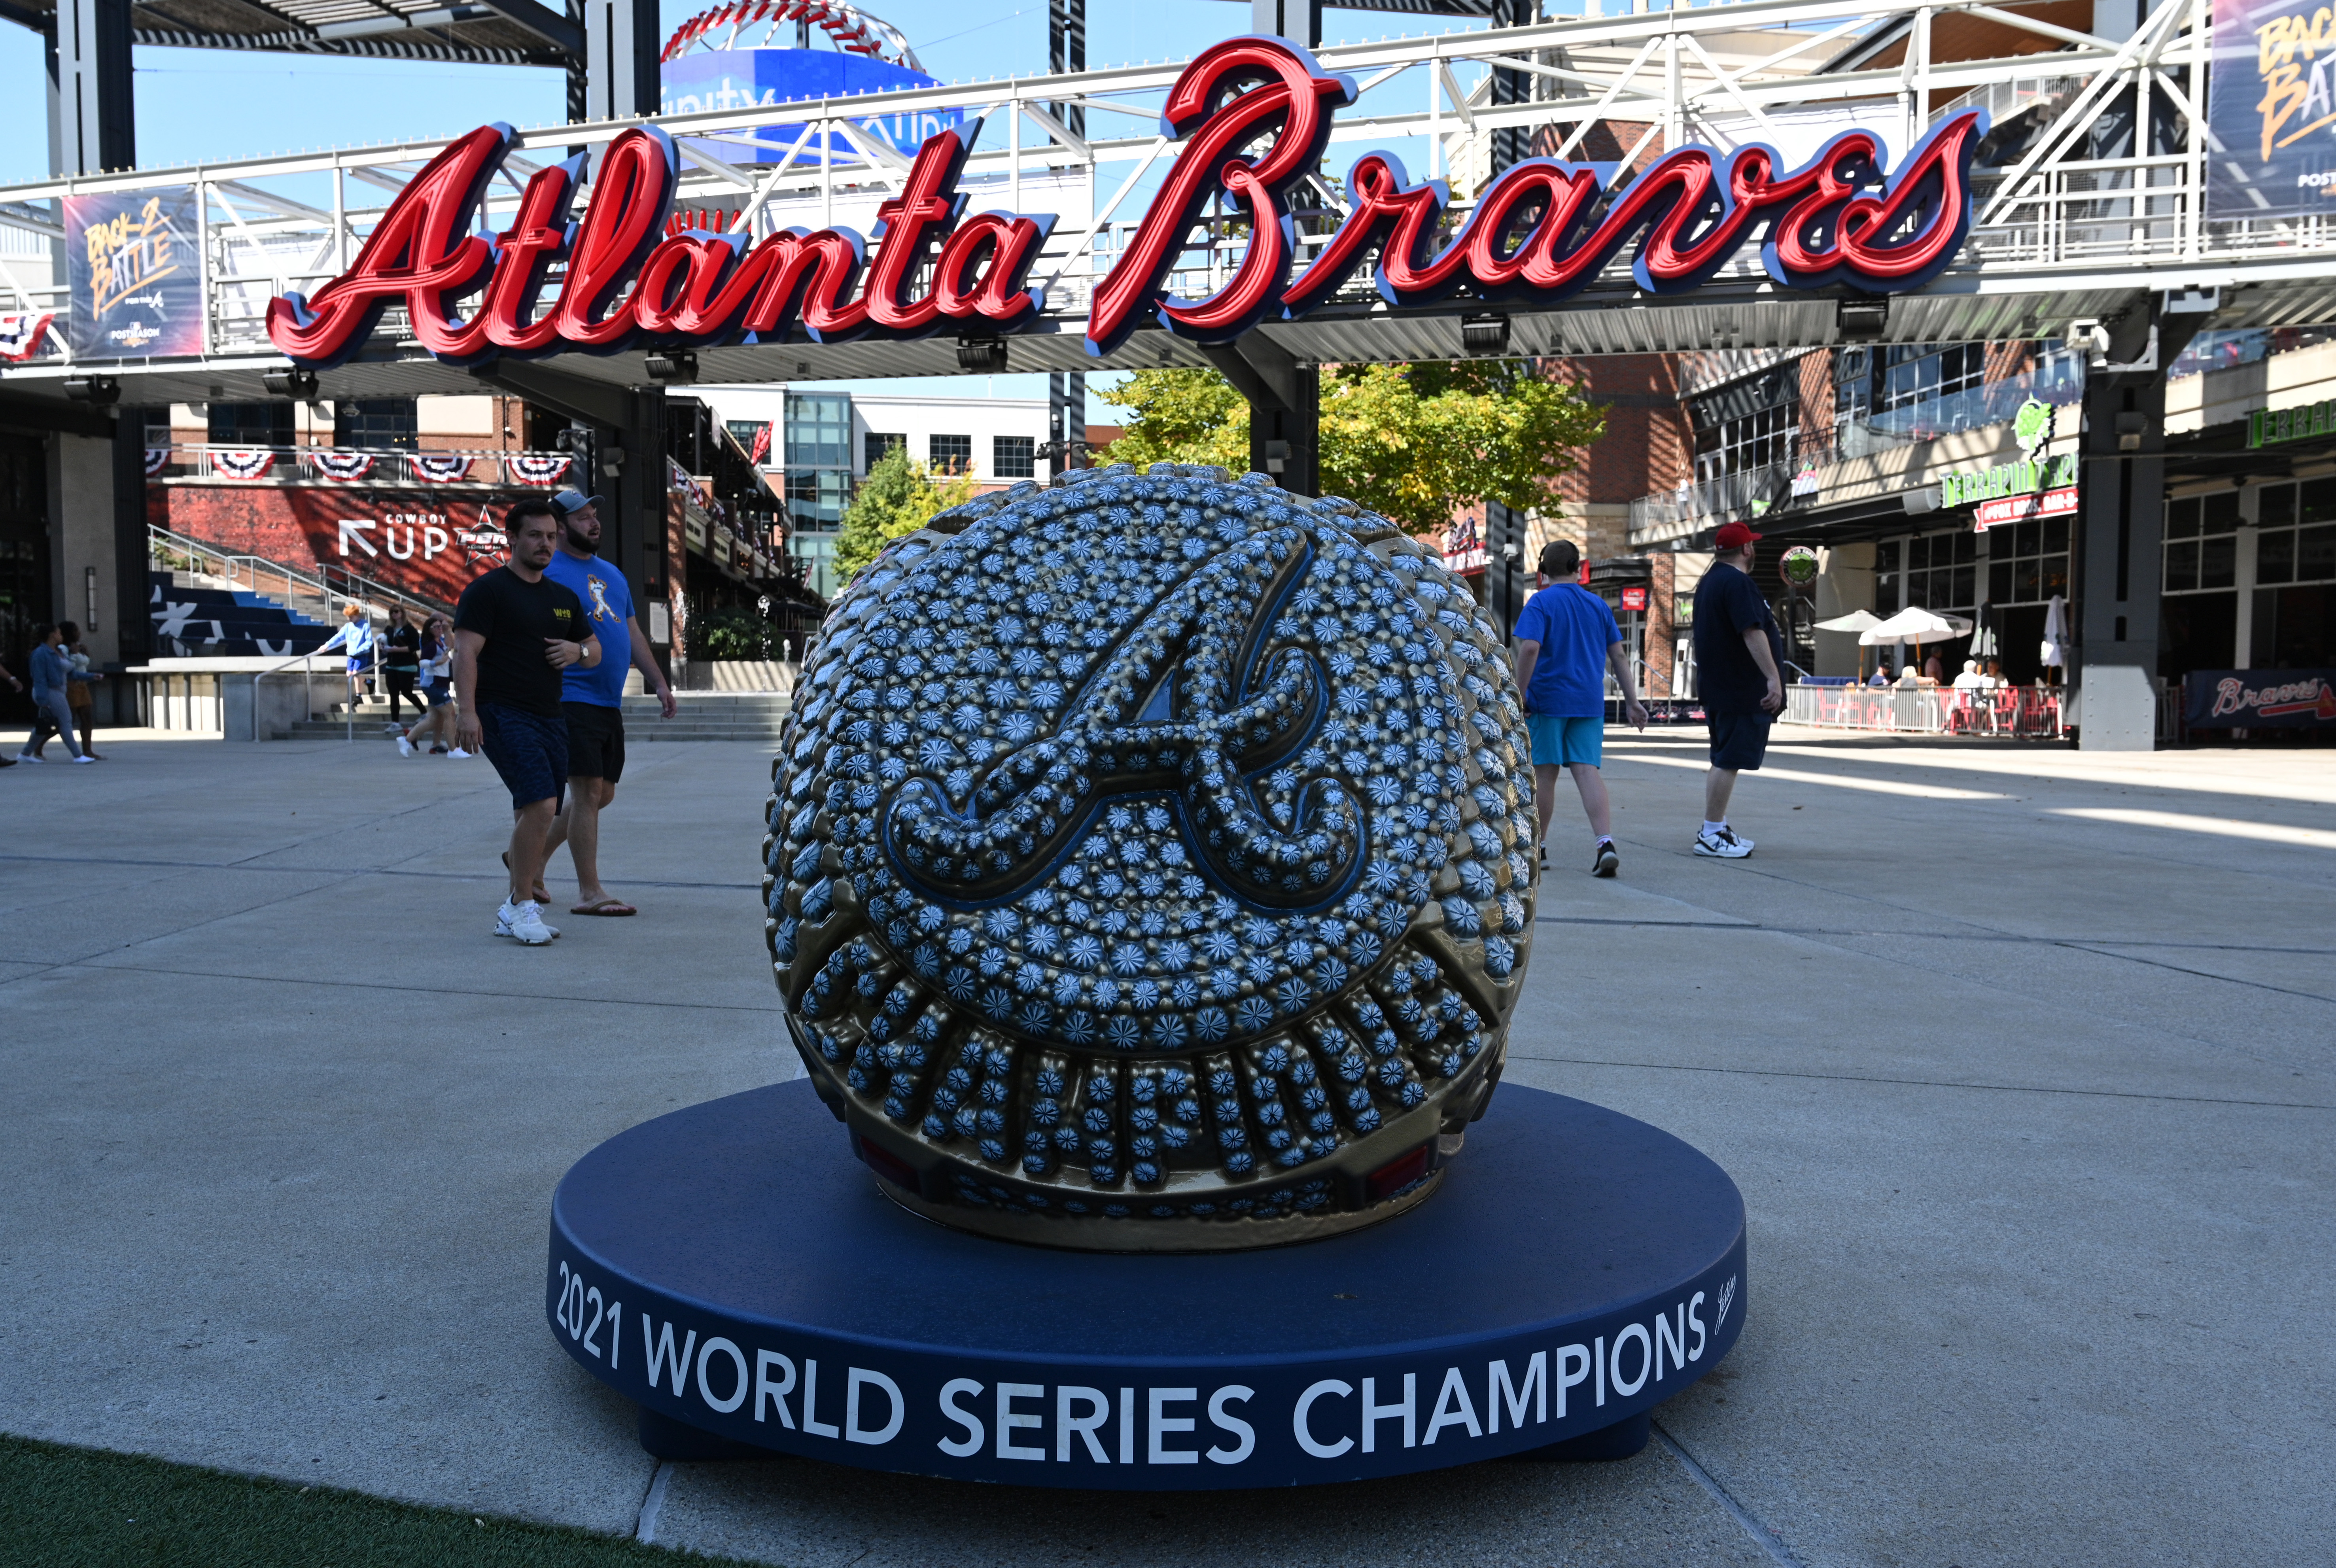 AJC book celebrates Atlanta Braves World Series season - Against All Odds